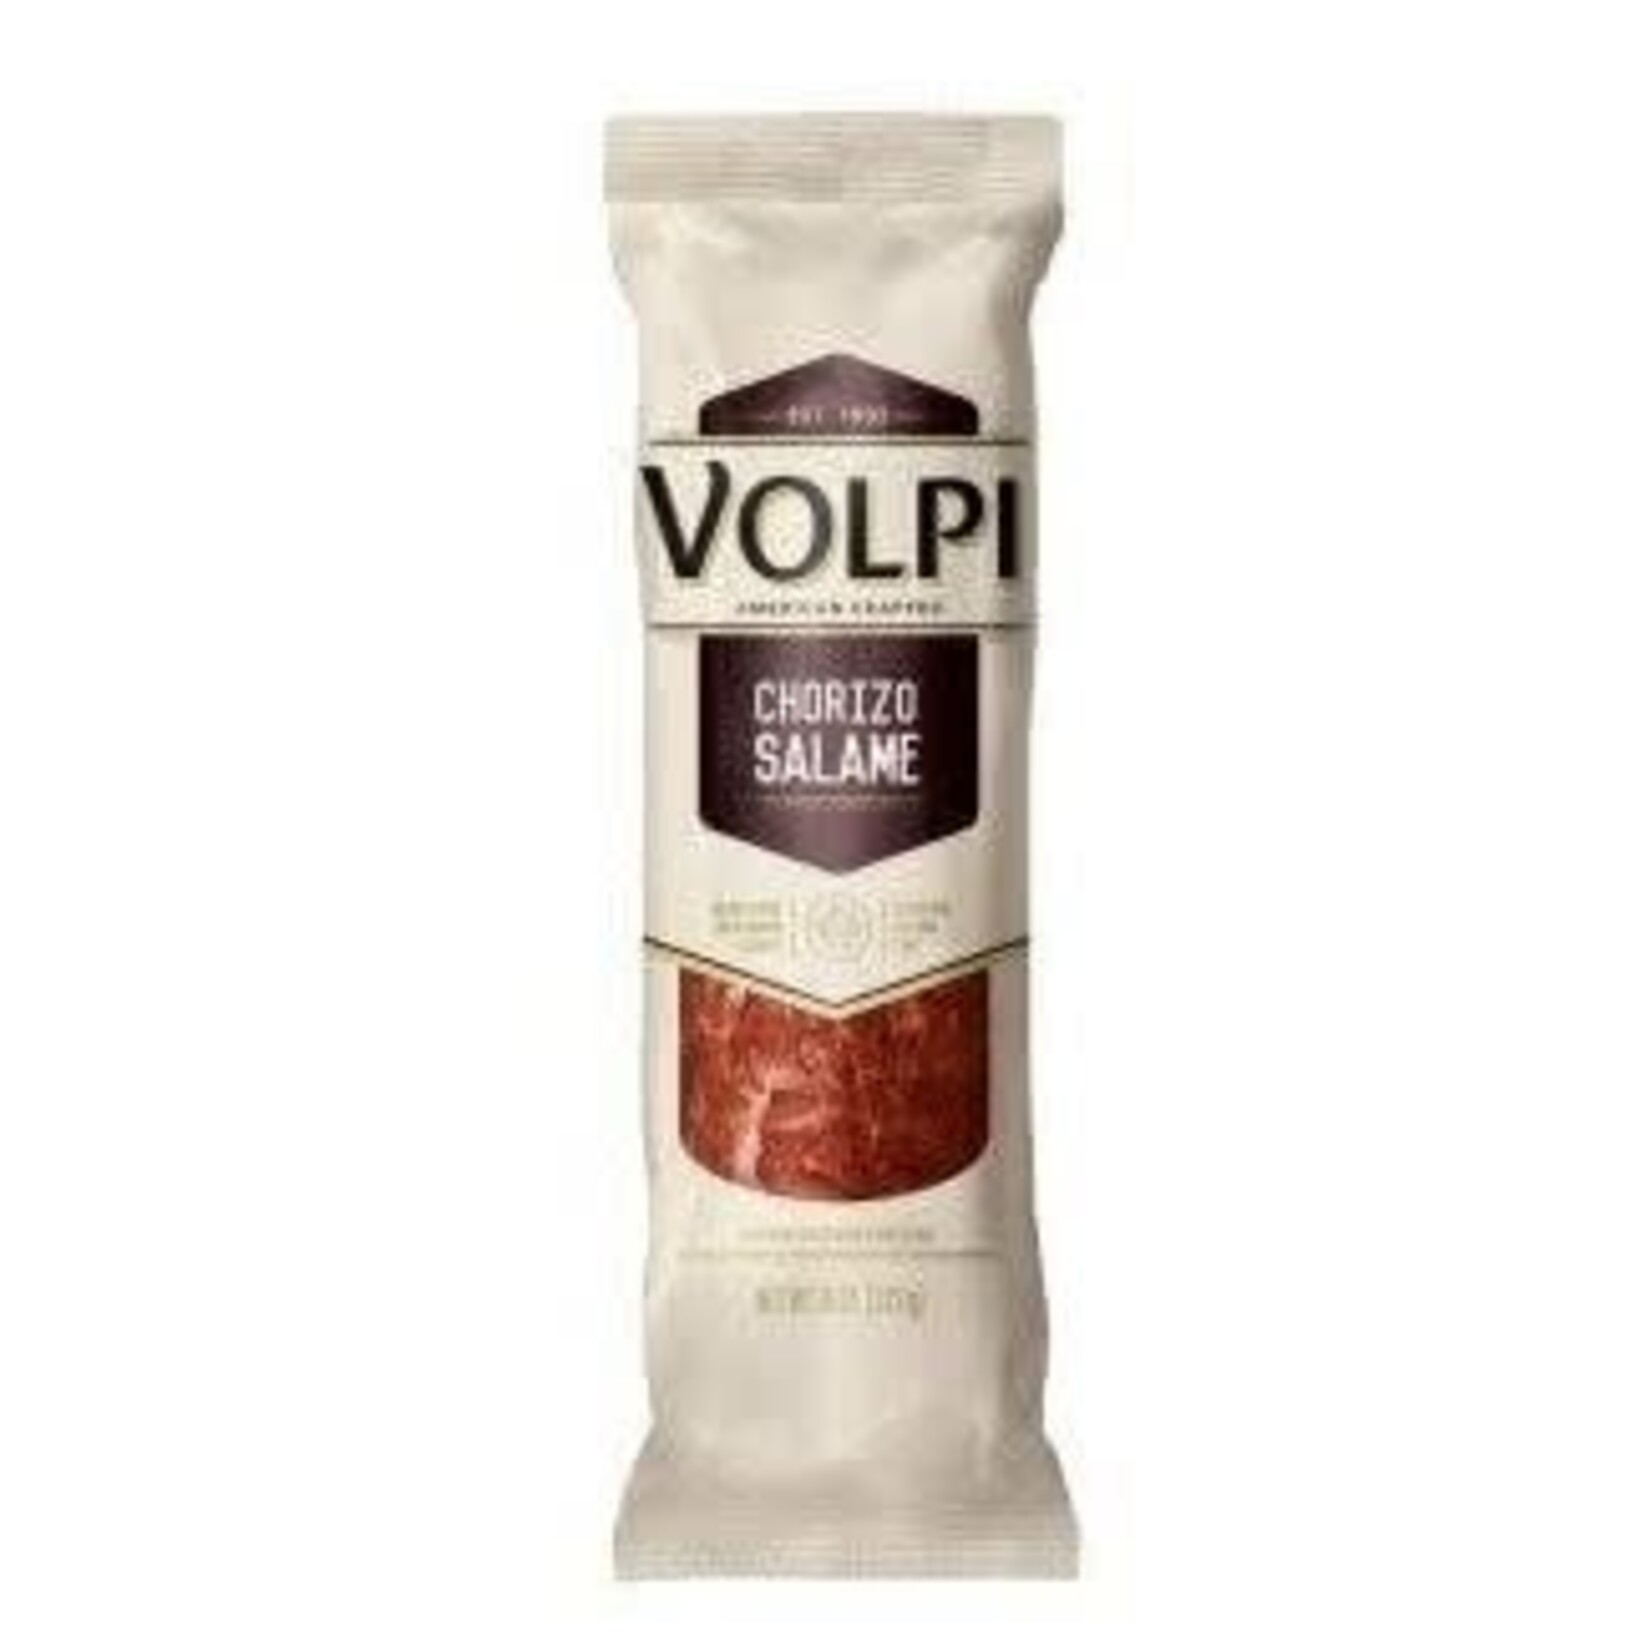 Volpi Volpi Salame Chorizo 5 ounce